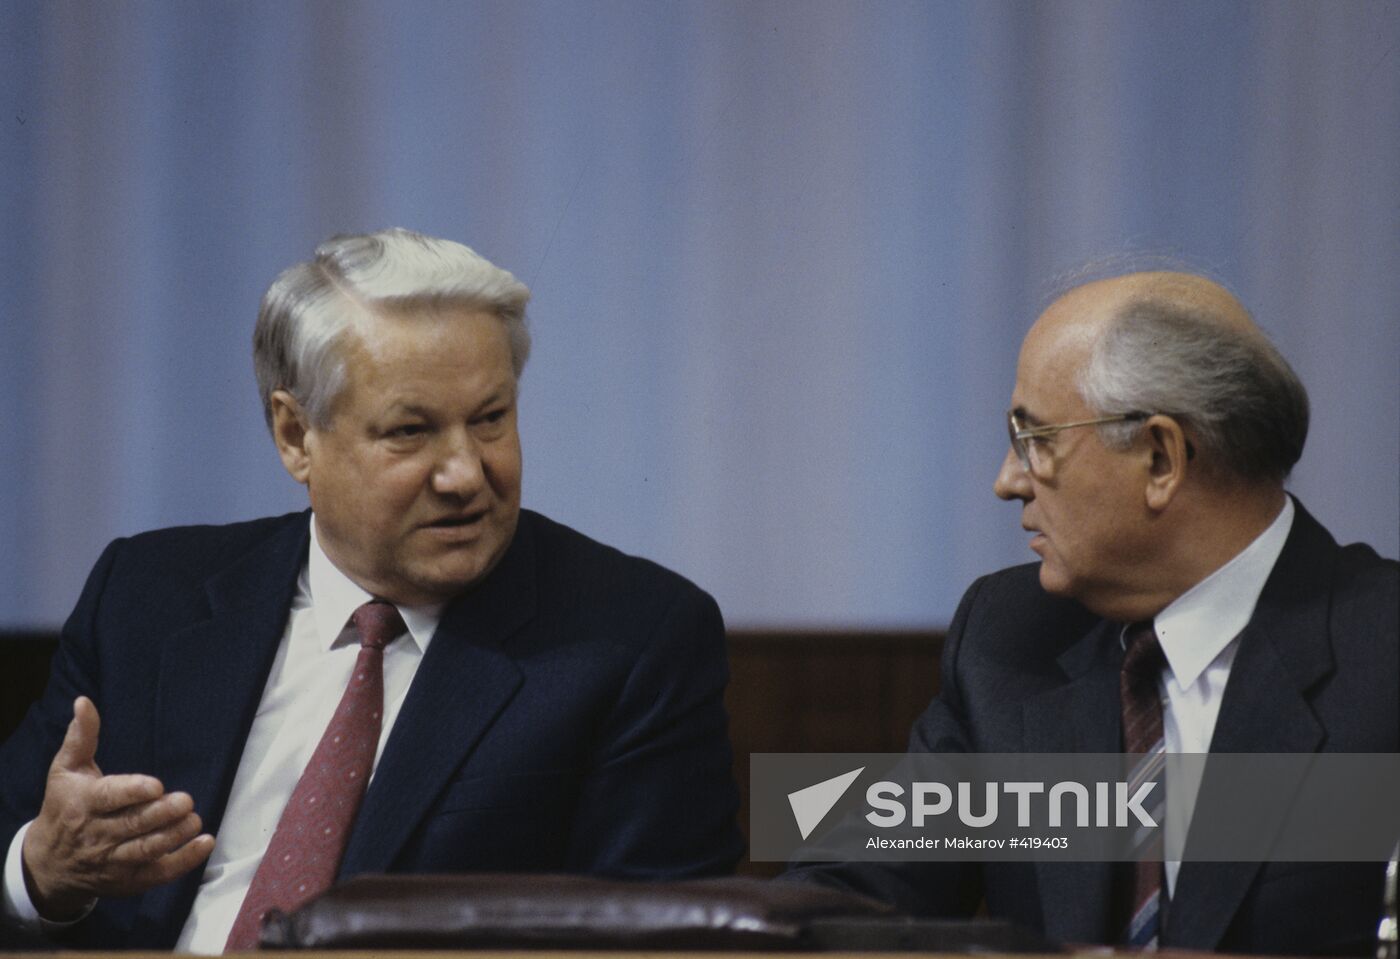 Boris Yeltsin and Mikhail Gorbachev